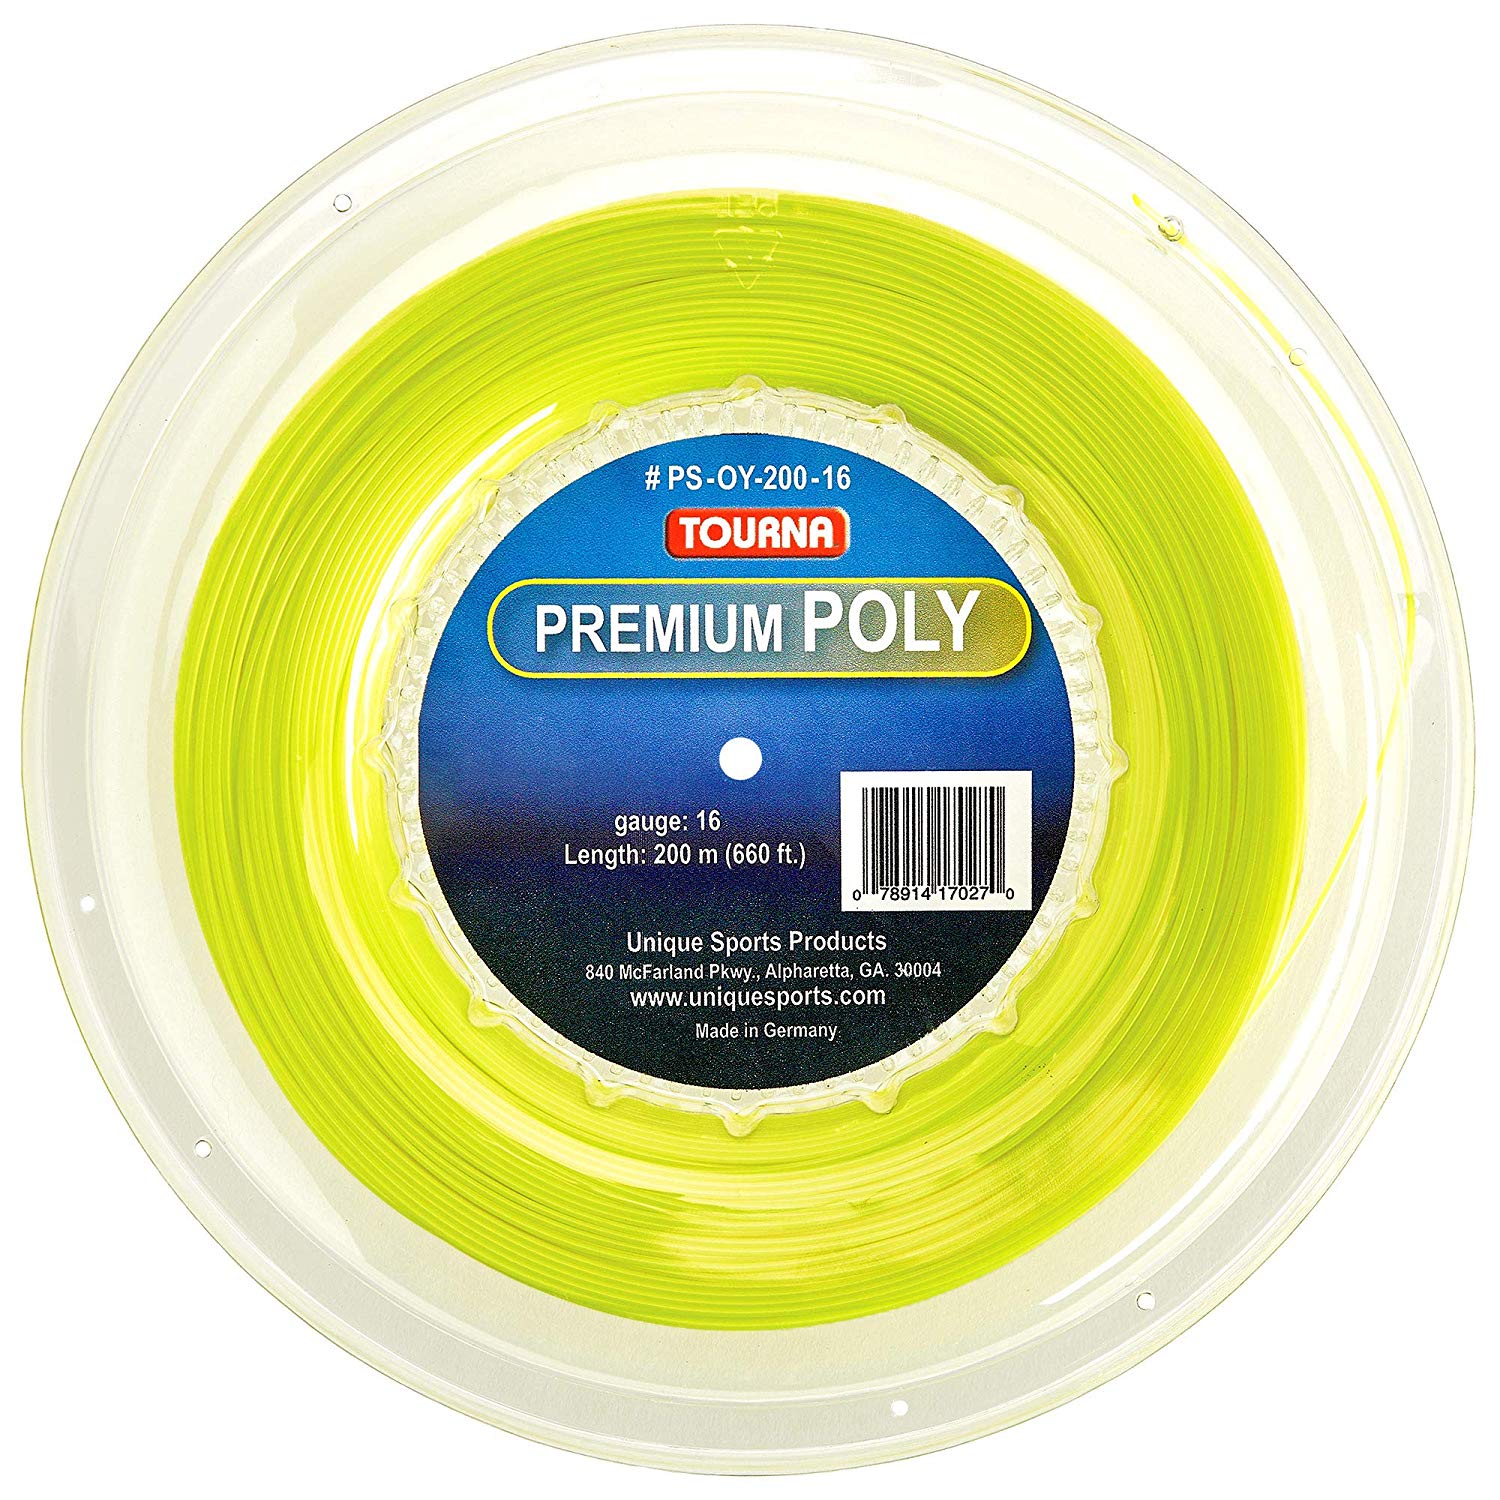 TOURNA Premium Poly เอ็นเทนนิส สี Optic yellow 200m..-17 gauge  1 ม้วน  ส่งฟรี